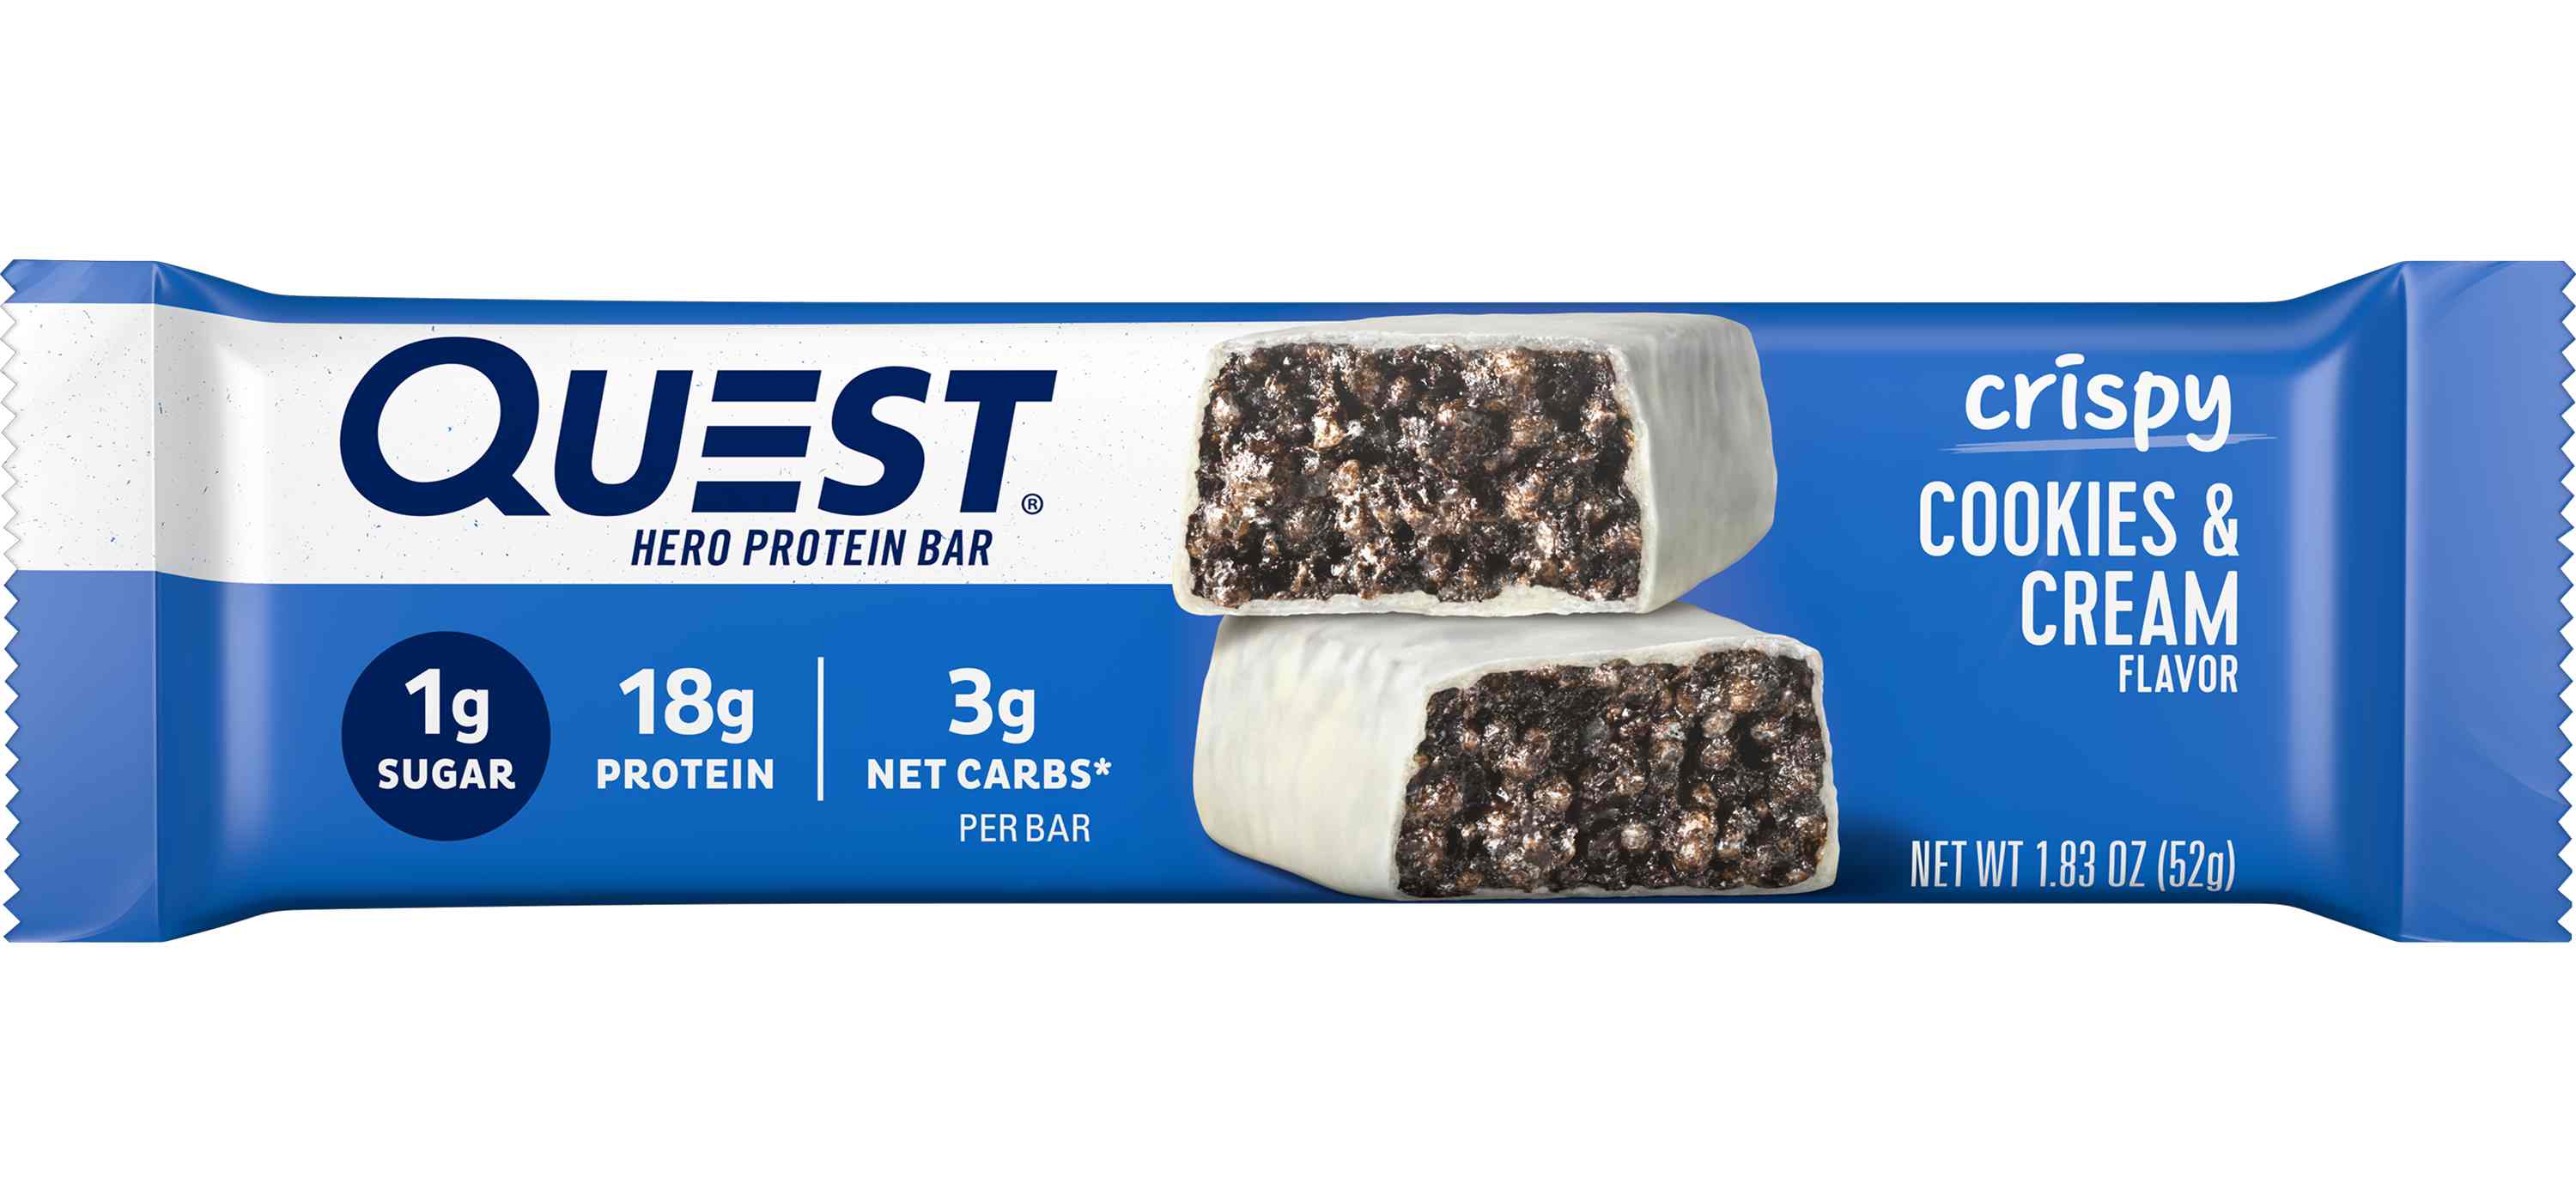 Quest Hero 18g Protein Bar - Crispy Cookies & Cream; image 1 of 2